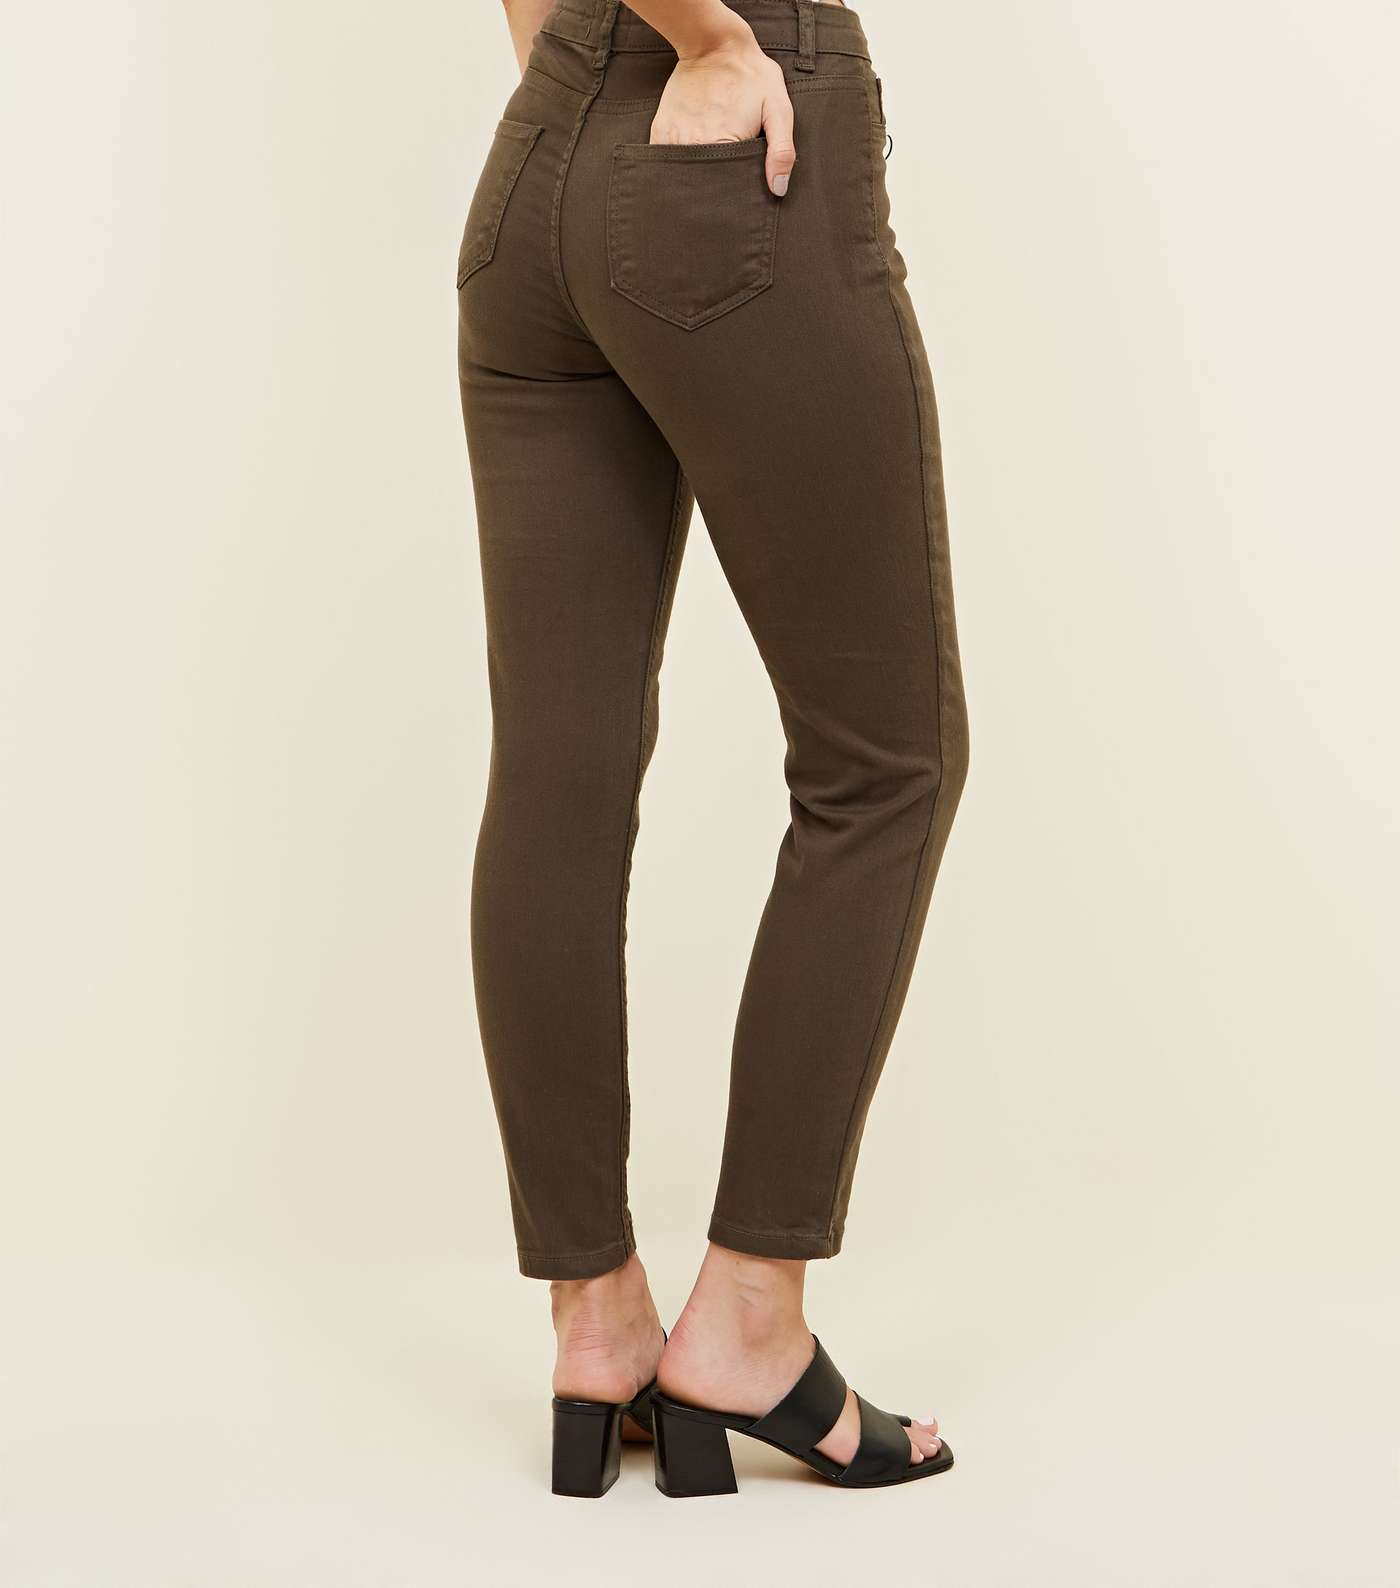 Khaki Ankle Grazer Skinny Jenna Jeans Image 3